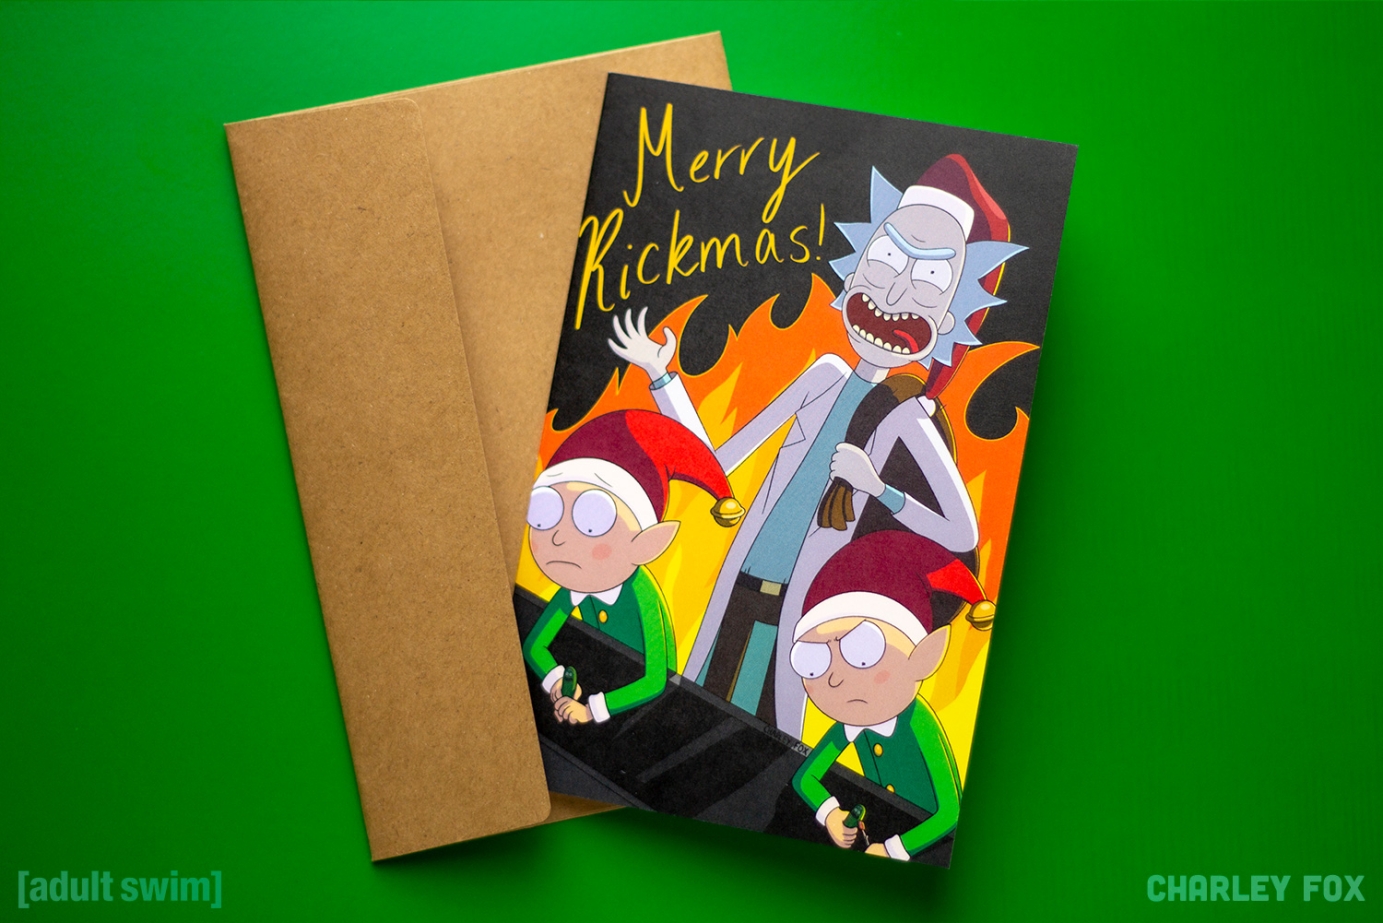 Rick-and-Morty-Card-Merry-Rickmas-02.jpg